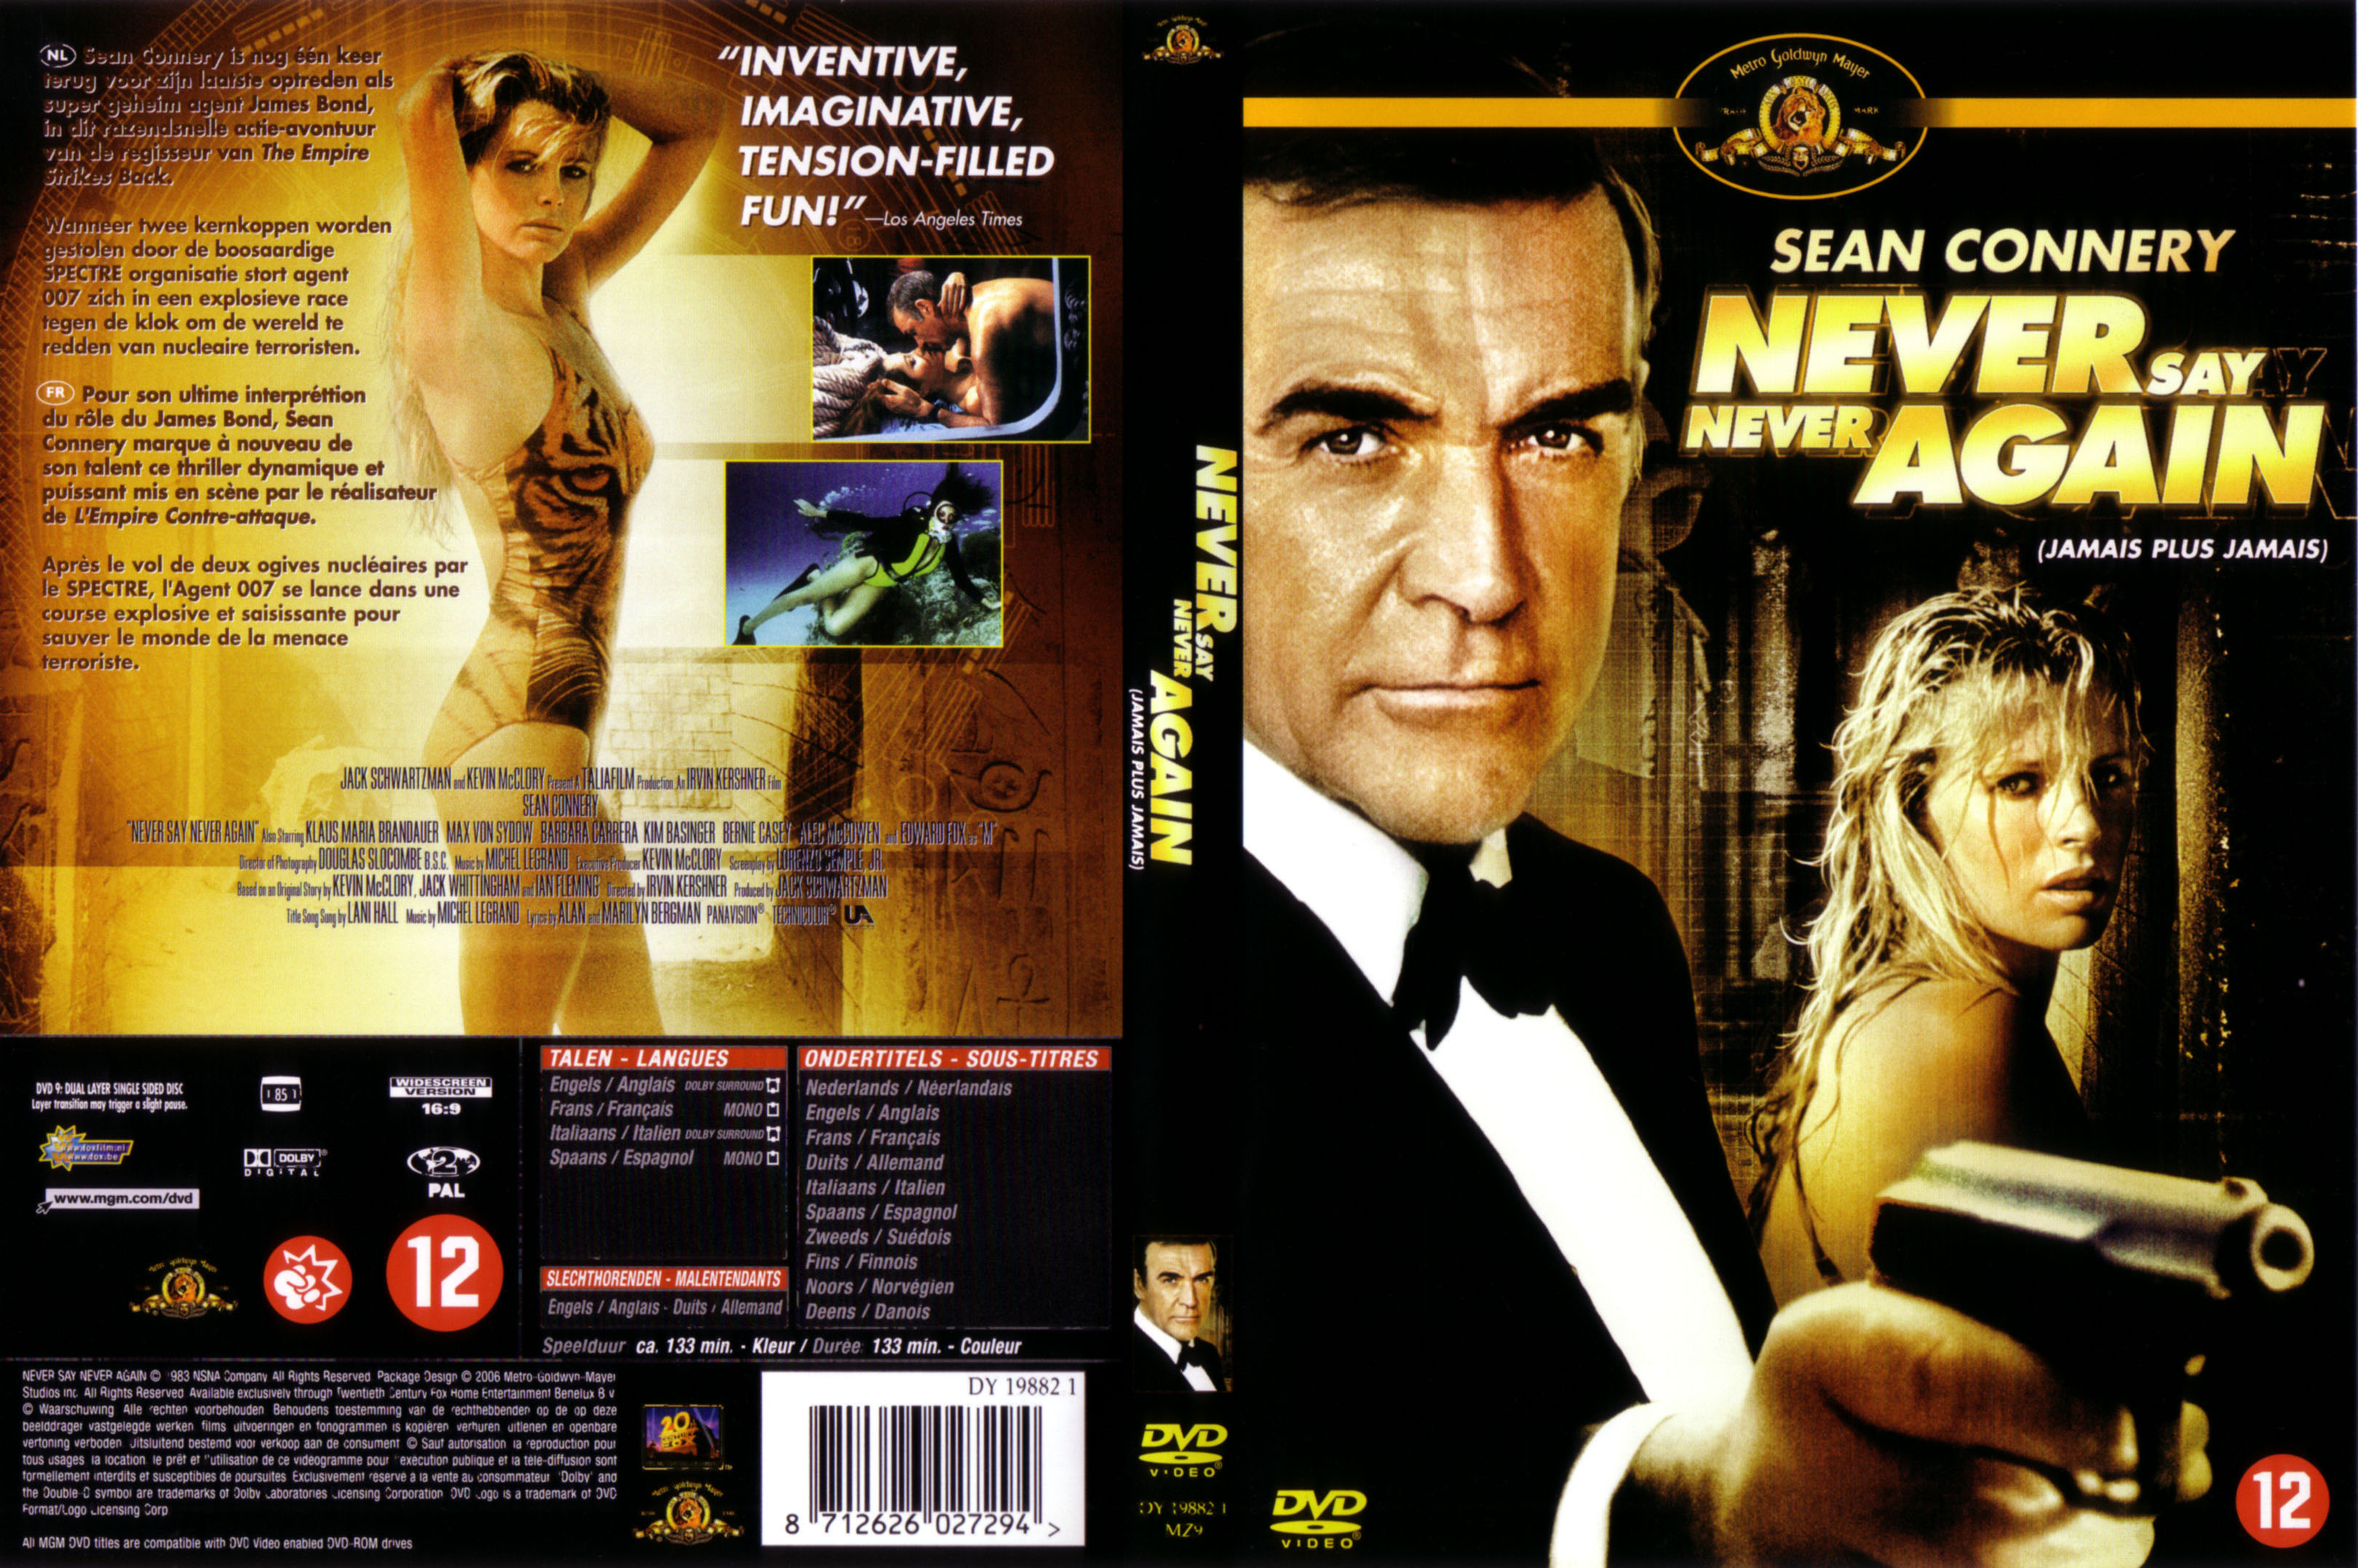 Jaquette DVD James Bond 007 Jamais plus jamais v2